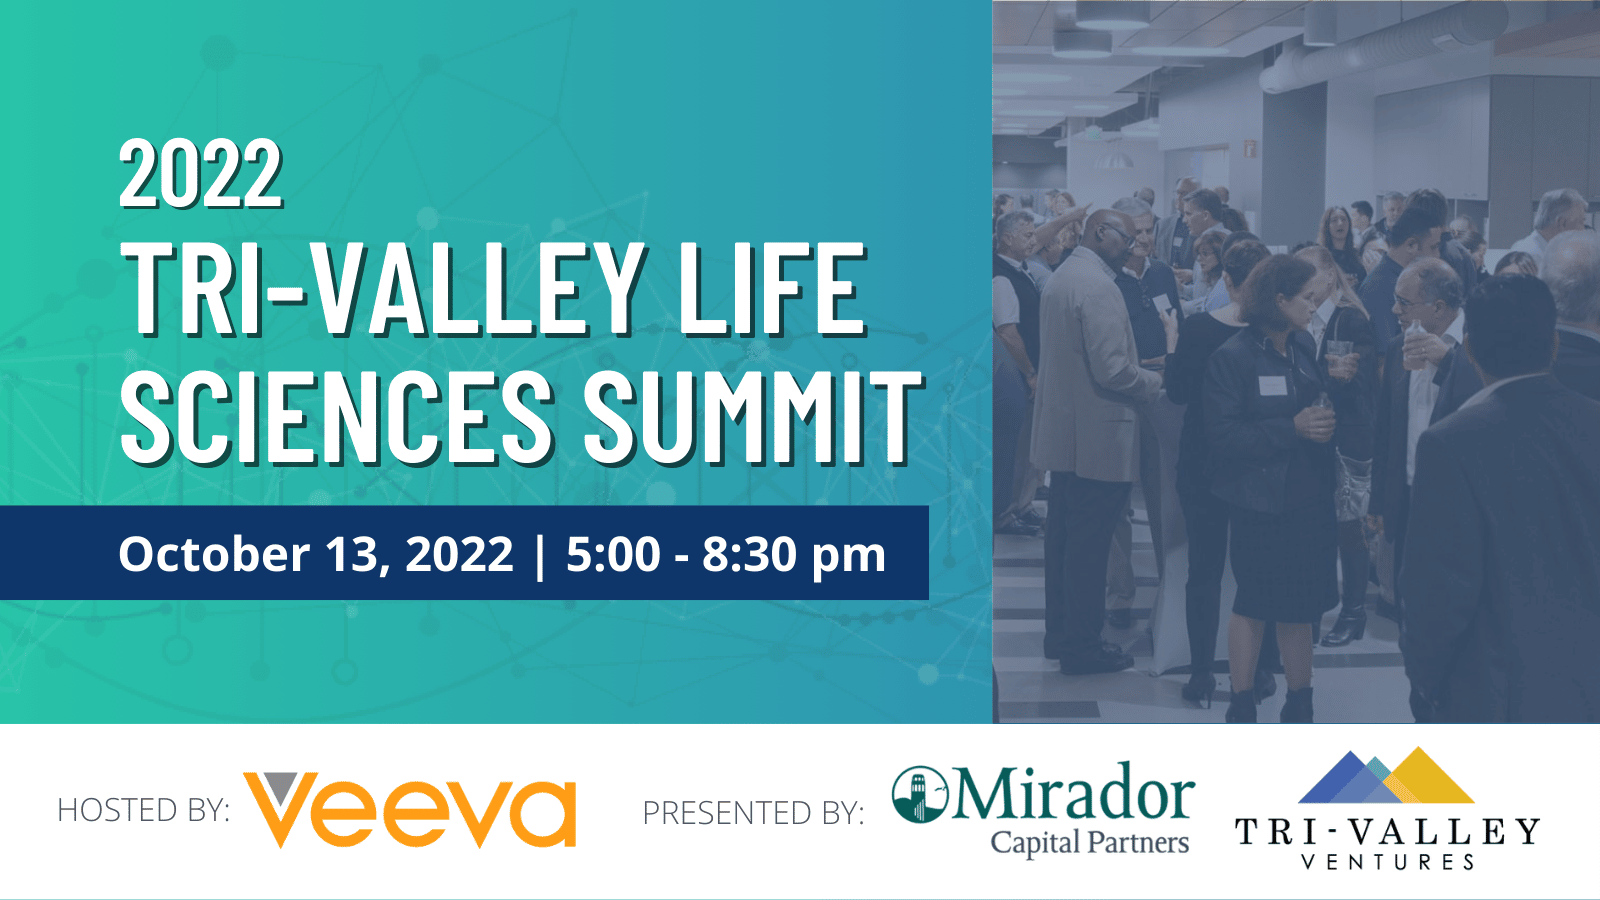 Tri-Valley Life Sciences Summit 2022 Event Information